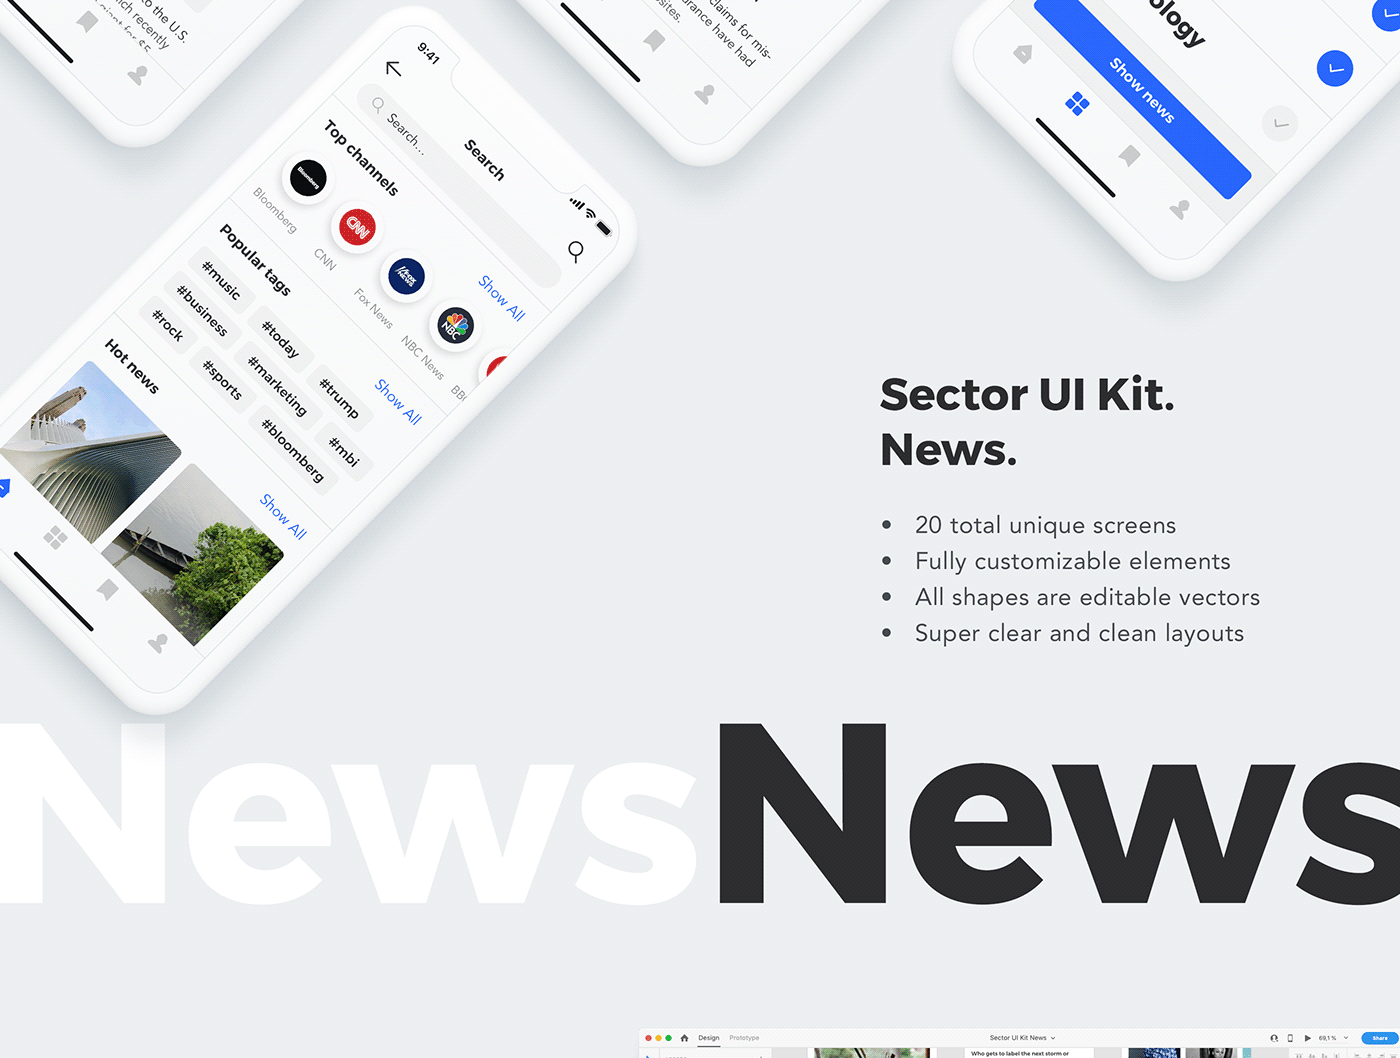 News apps  News Template news ui kit IOS NEWS News mobile ui kit news screens News reader news service news agency